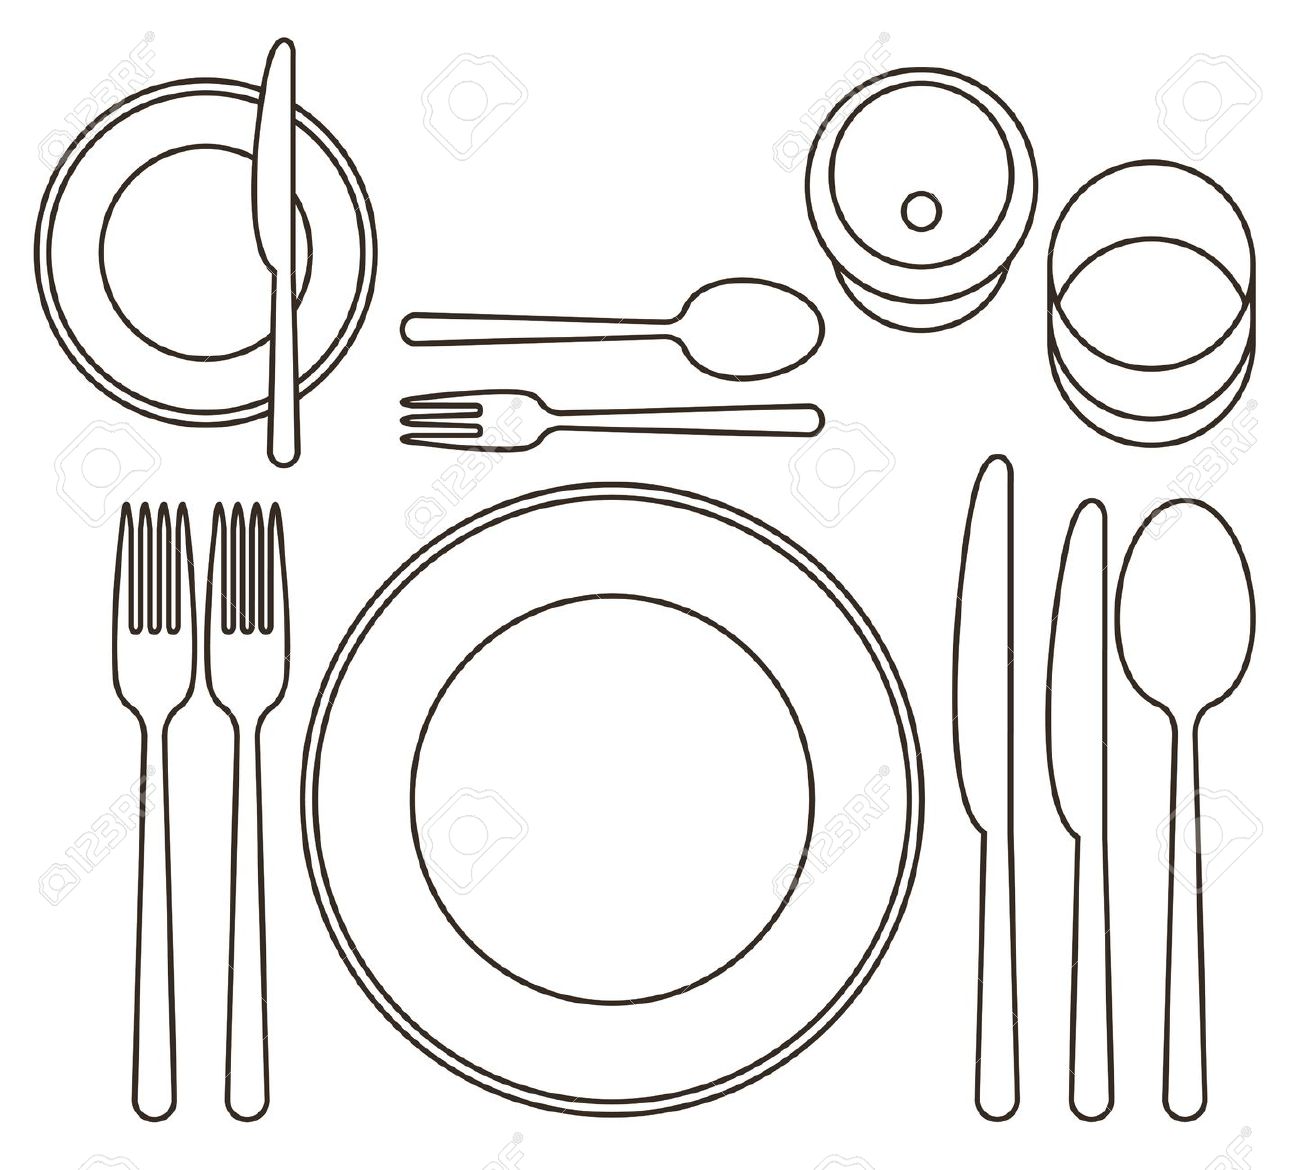 Dinner table setting clipart vector 